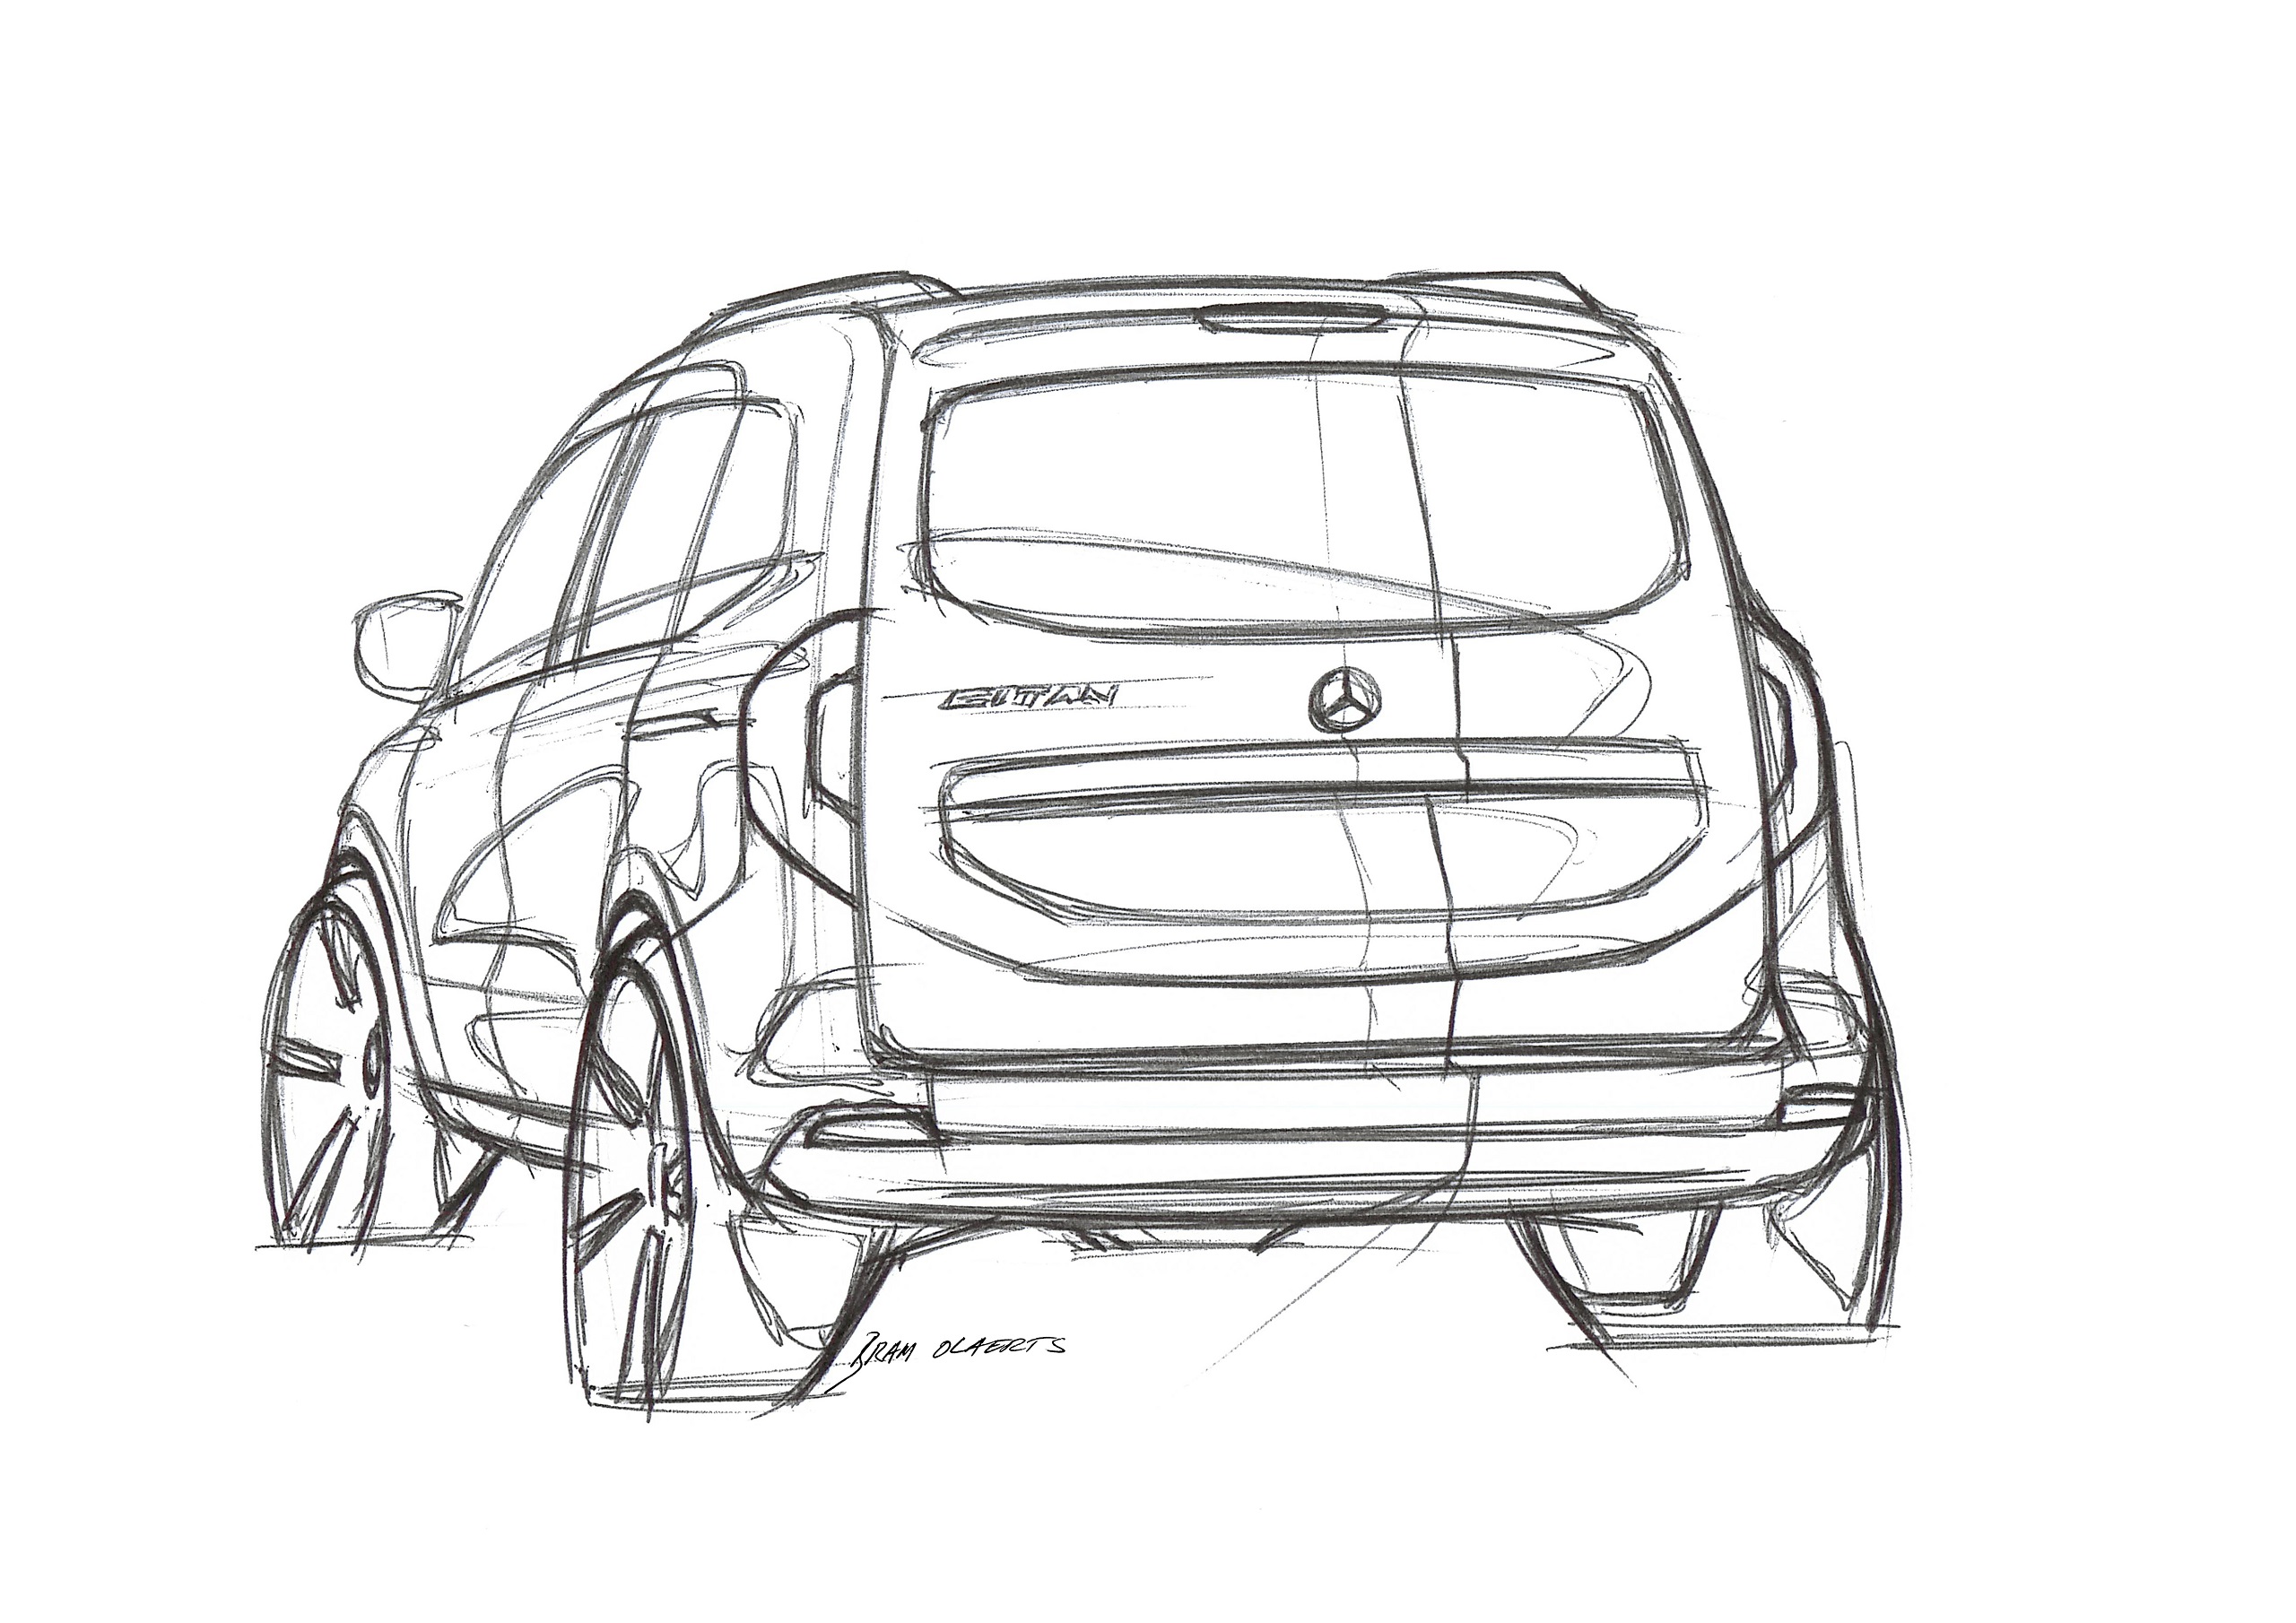 2022 Mercedes-Benz Citan Design Sketch Wallpapers #114 of 115